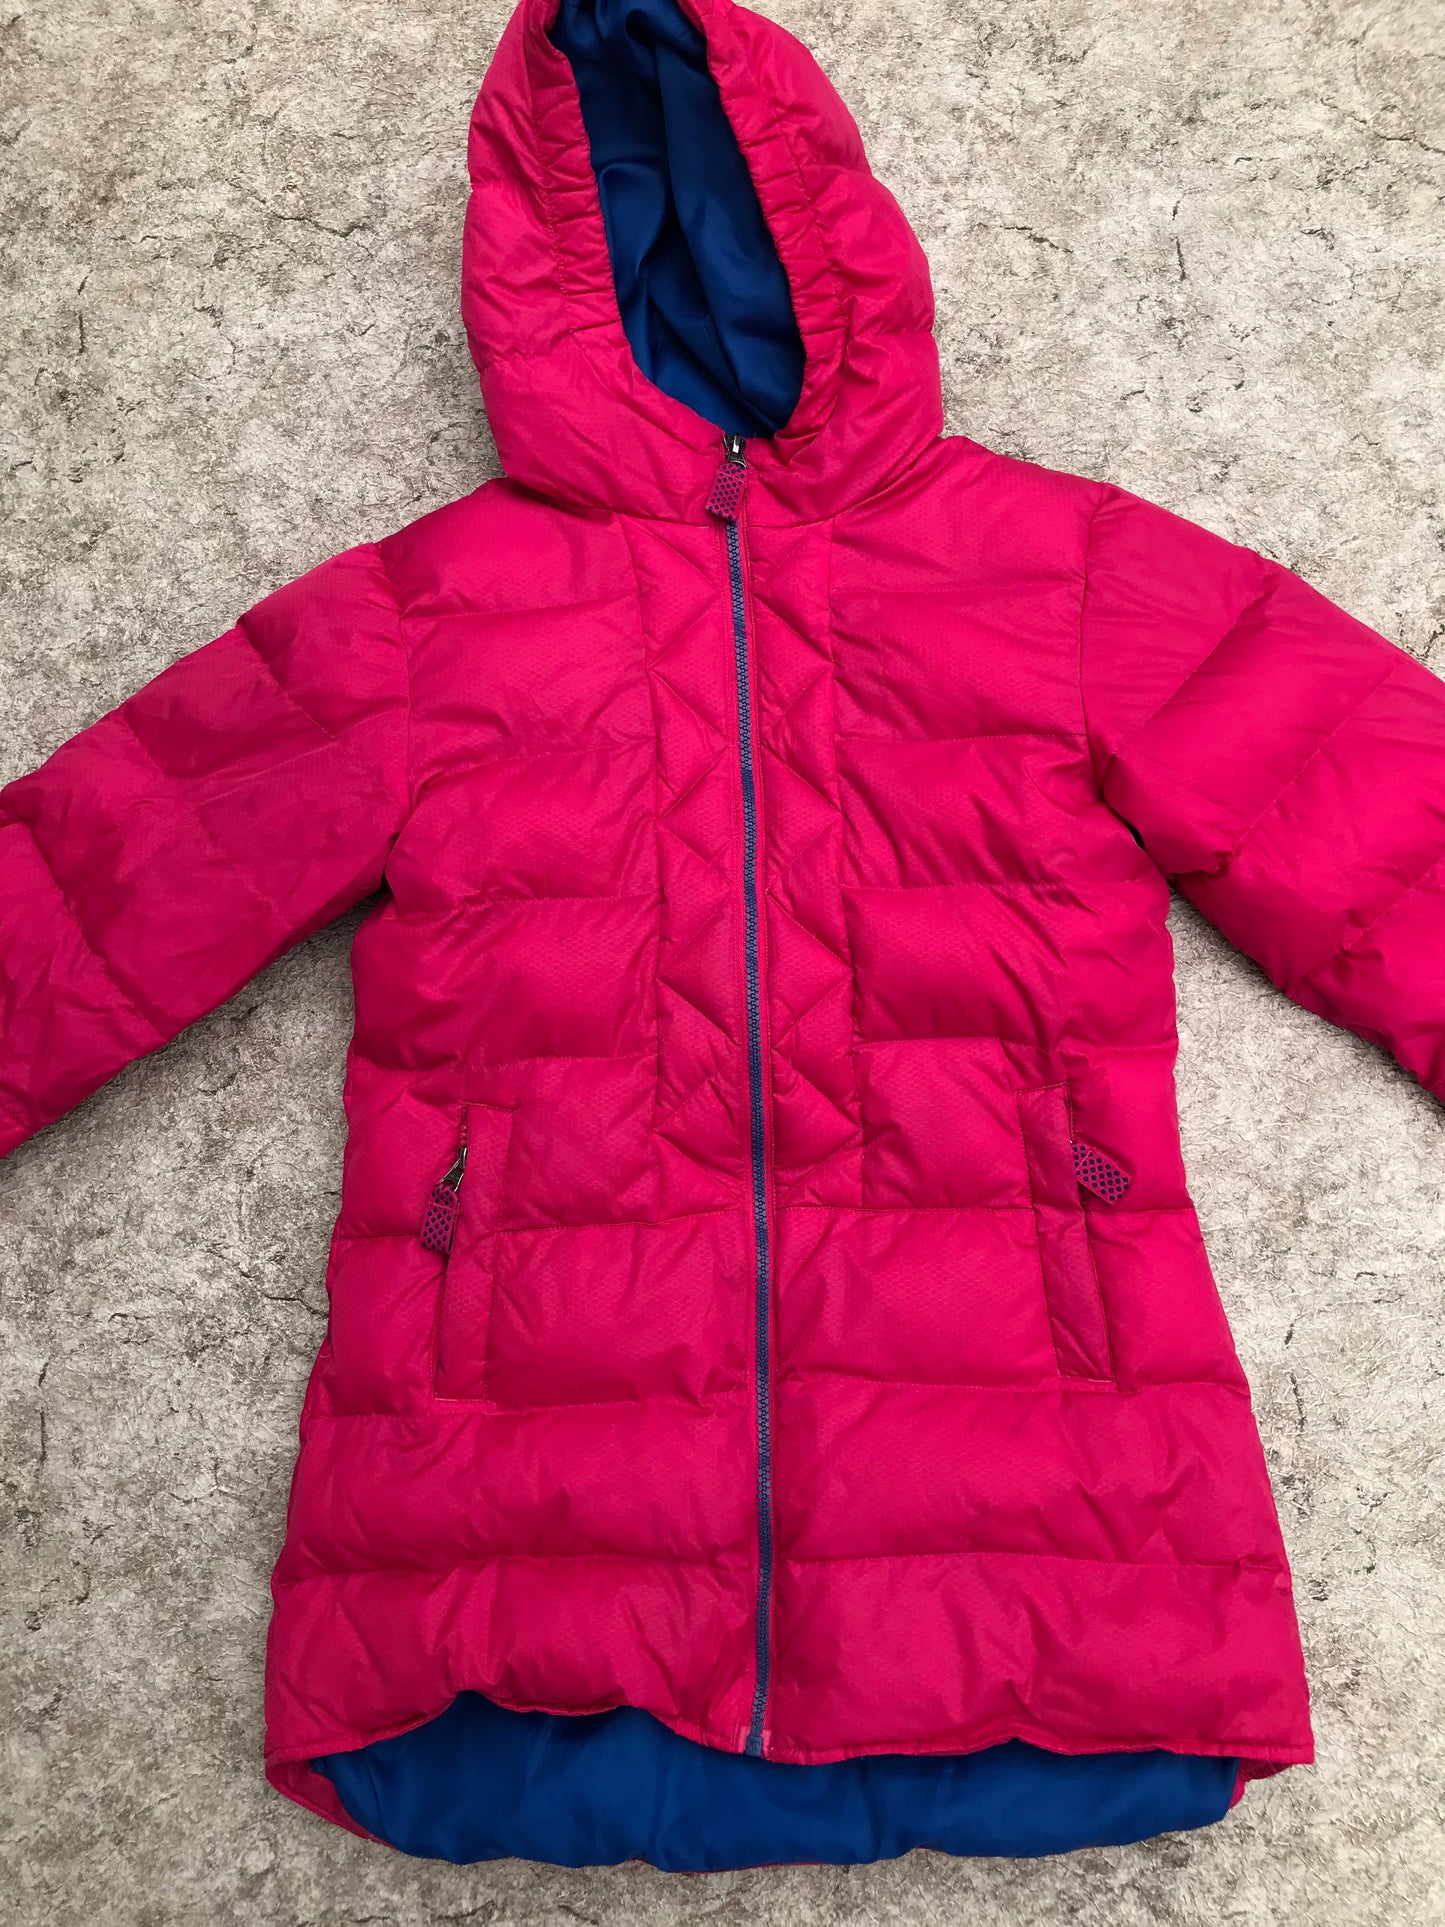 Winter Coat Child Size 10-12 Lands End Brilliant Raspberry and Blue Excellent